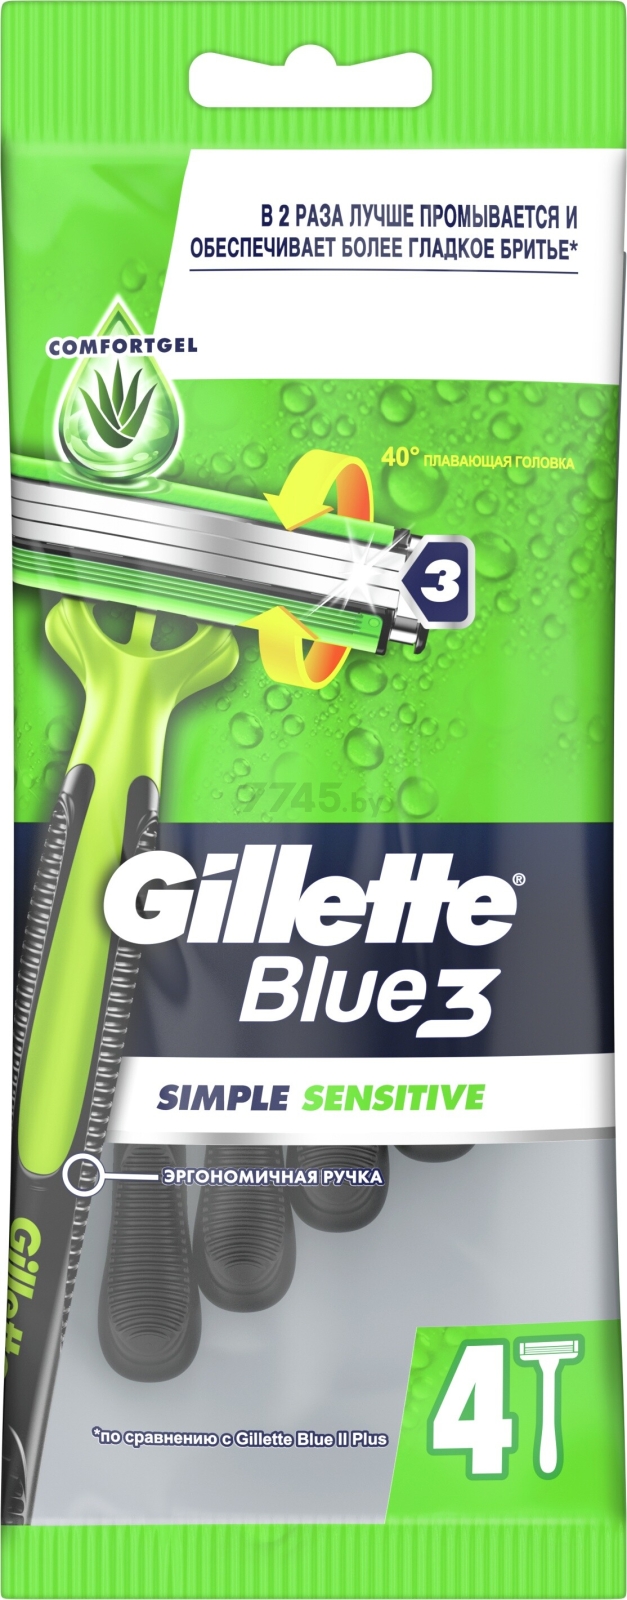 Бритва одноразовая GILLETTE Blue 3 Simple Sensitive 4 штуки (7702018599707)